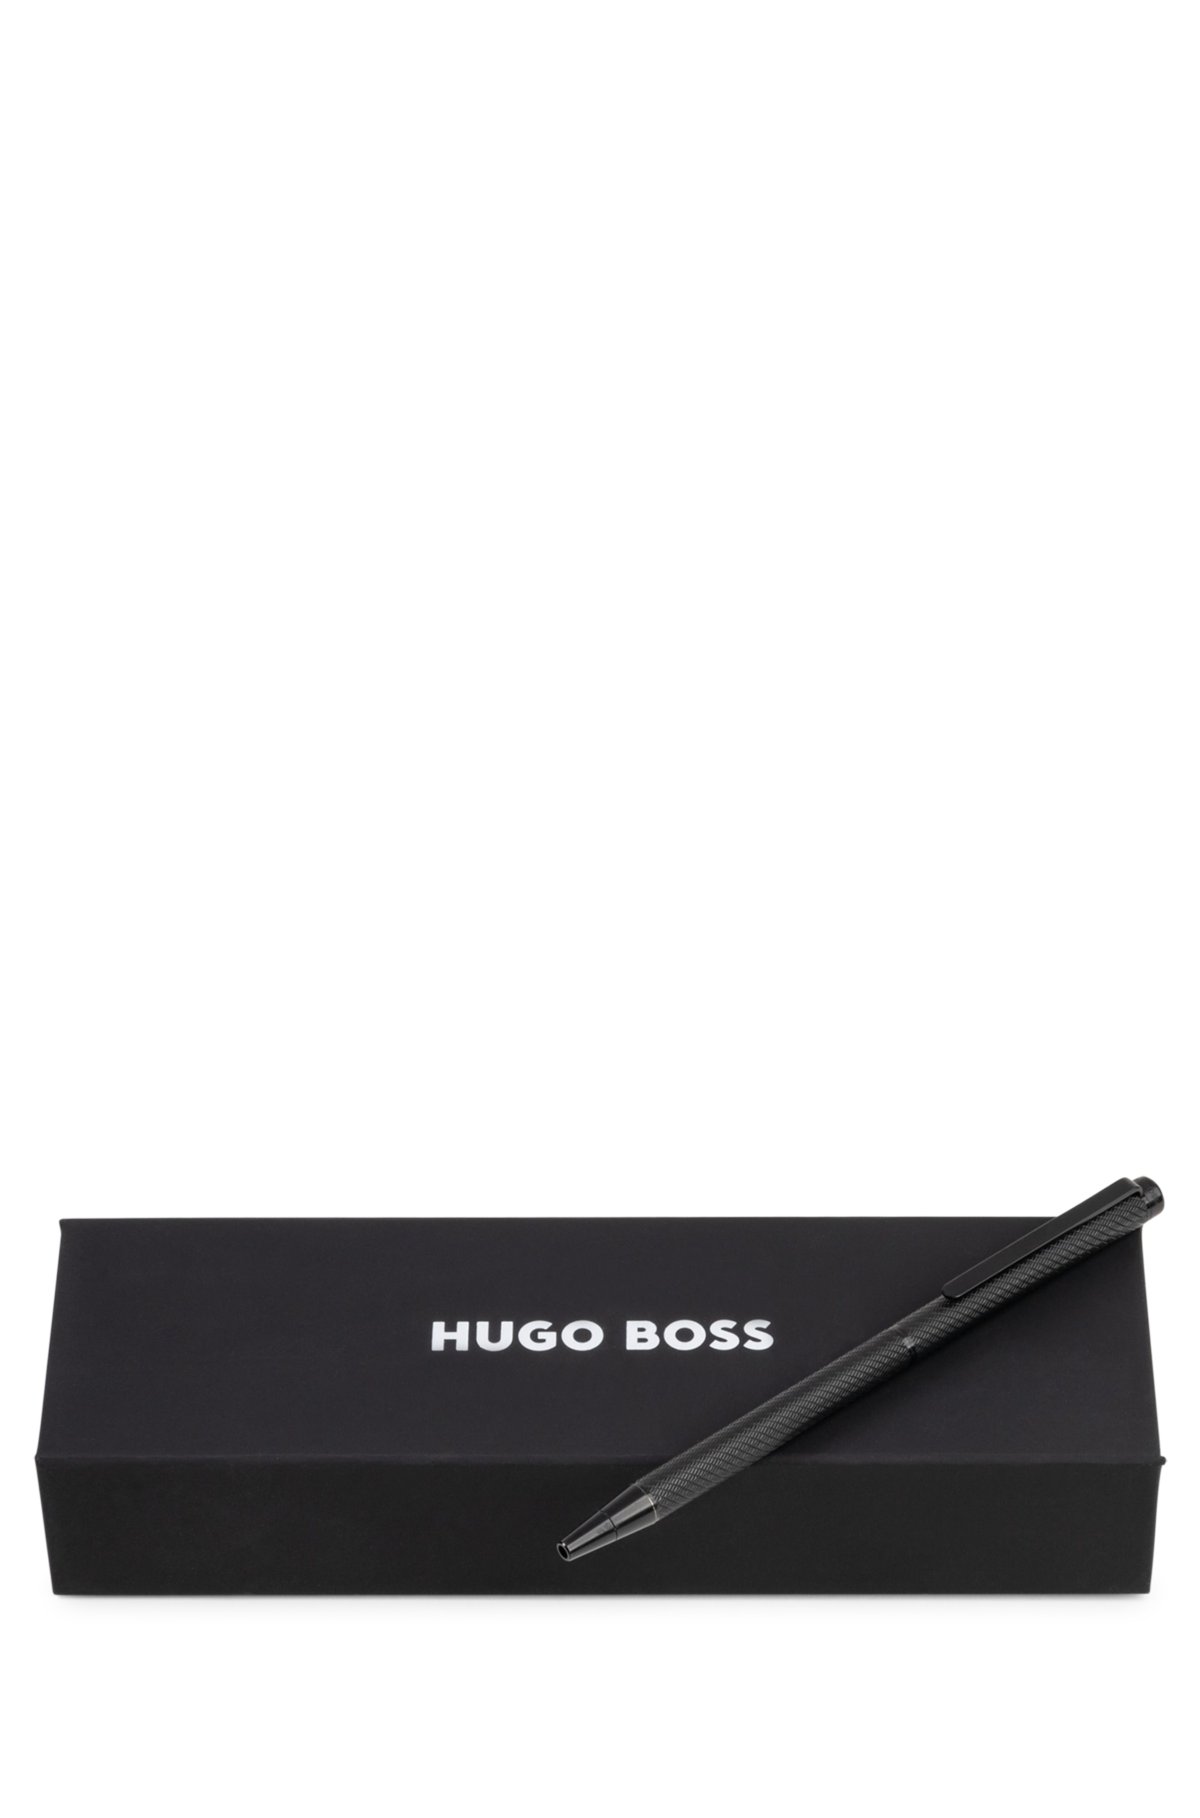 Hugo Boss Pens - Engraving Service